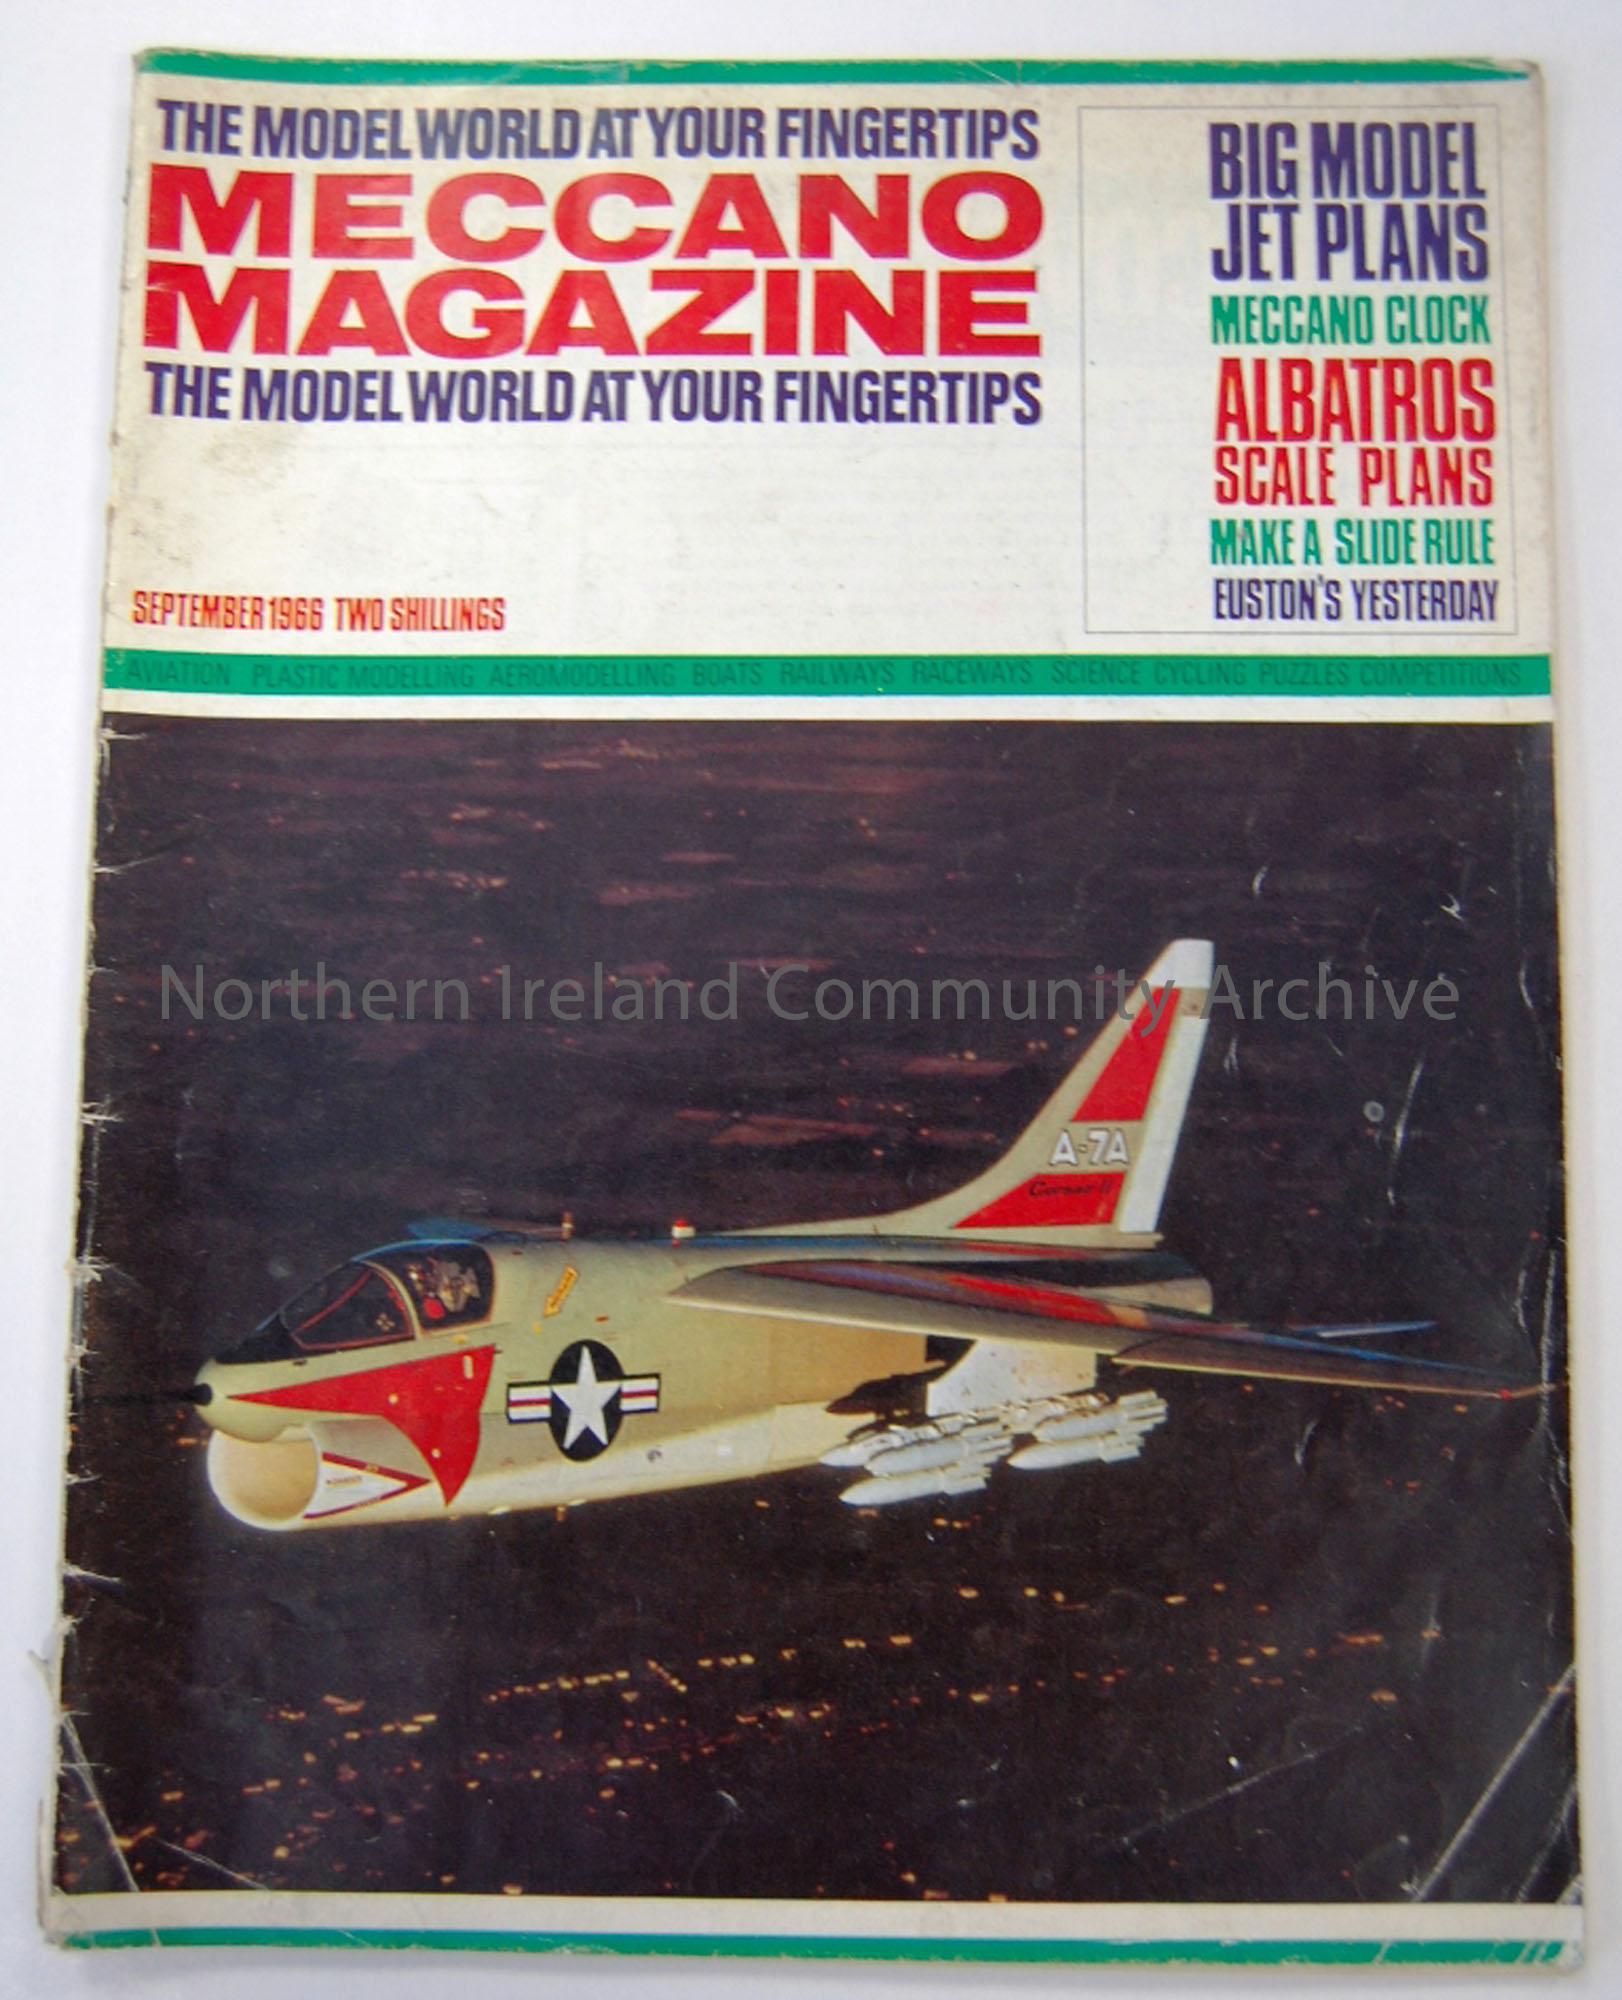 Meccano magazine, The model world at your fingertips. September 1966. Price 2 shillings